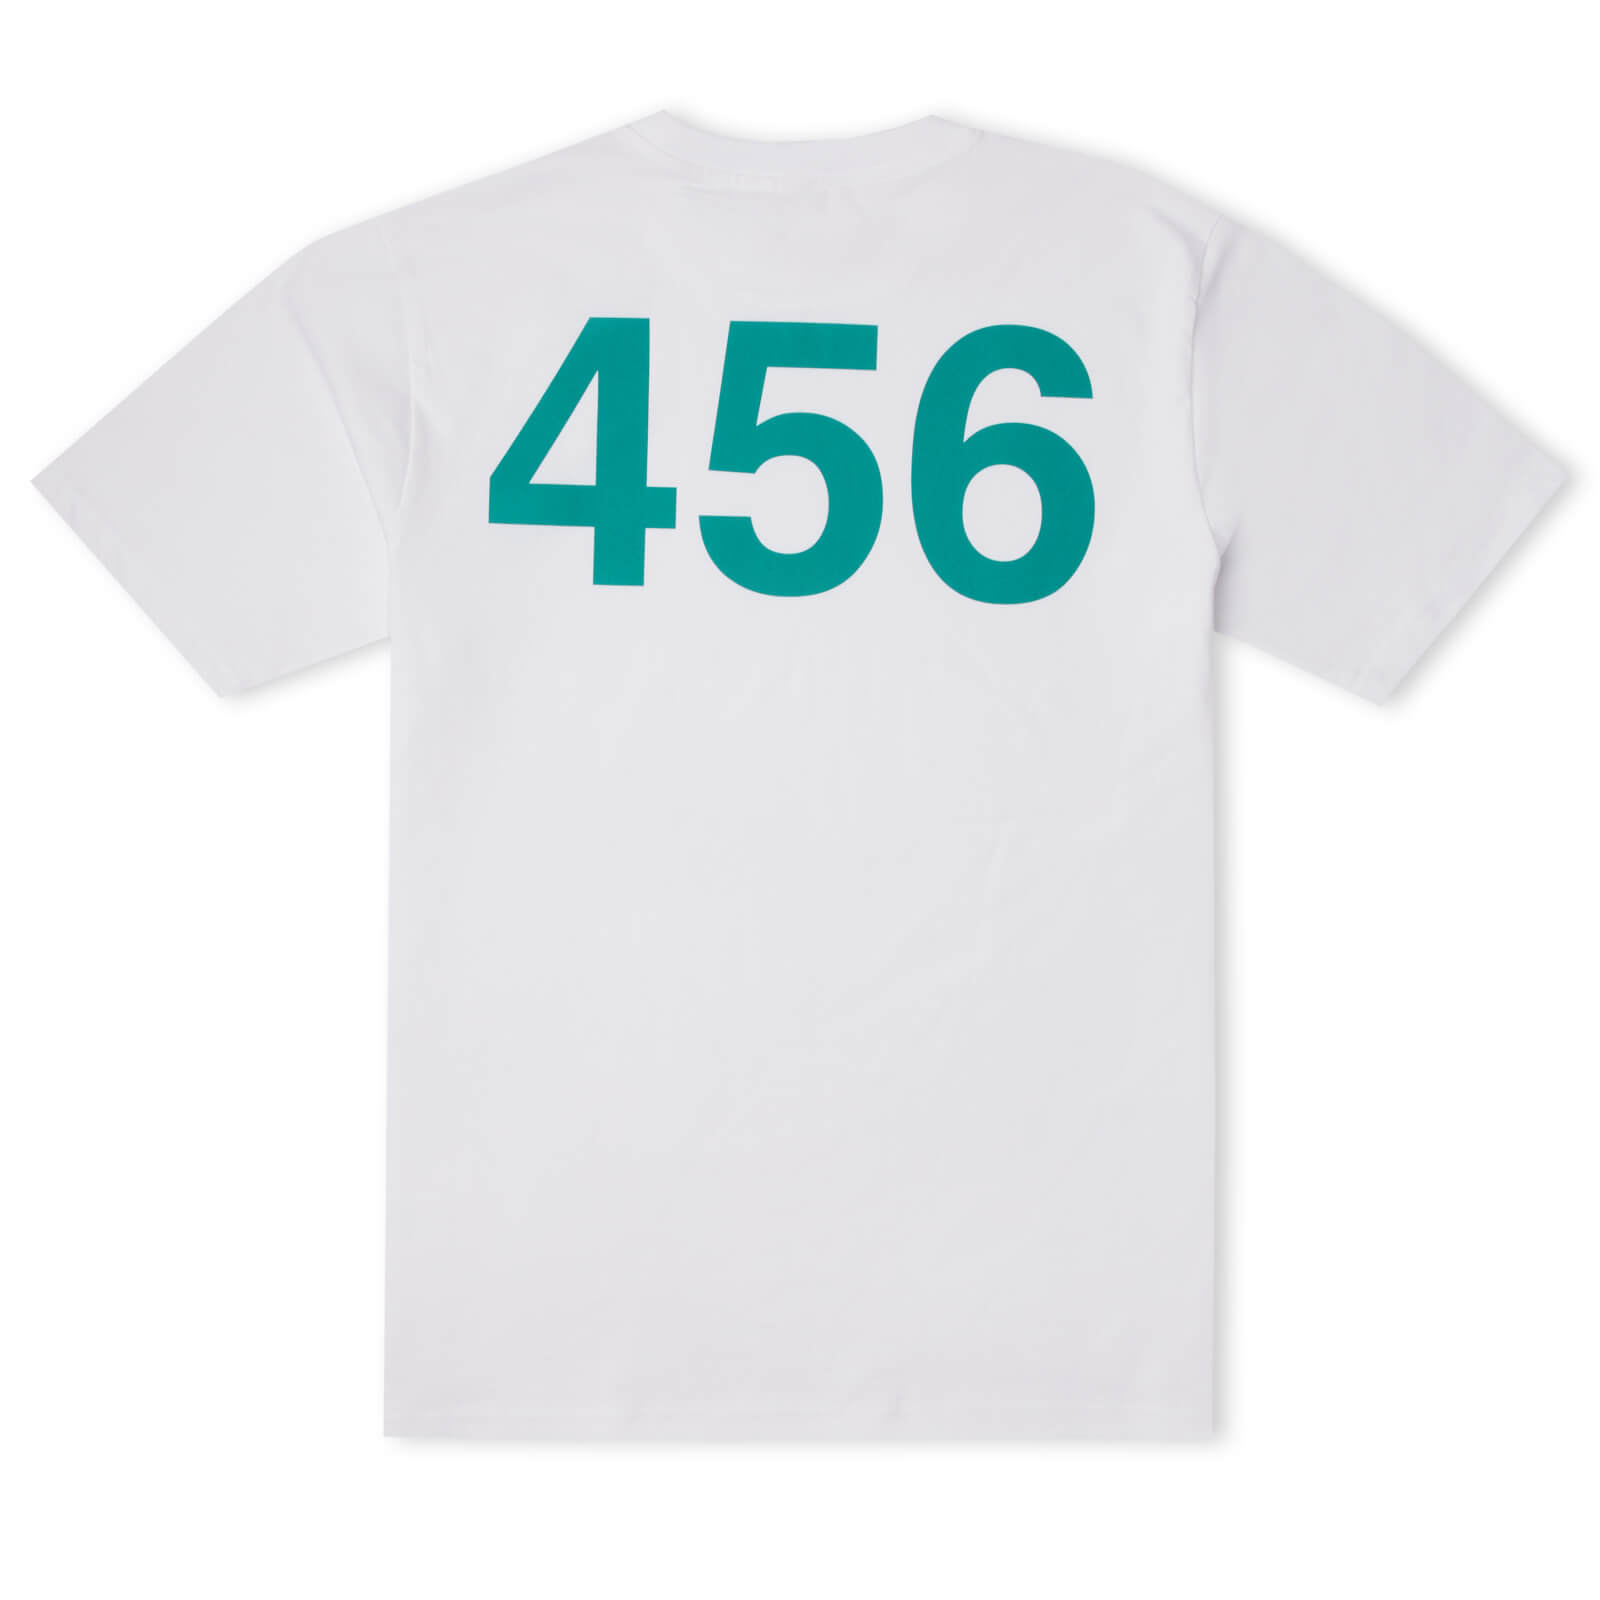 Image of Squid Game Player 456 Oversized Heavyweight T-Shirt - White - M - White